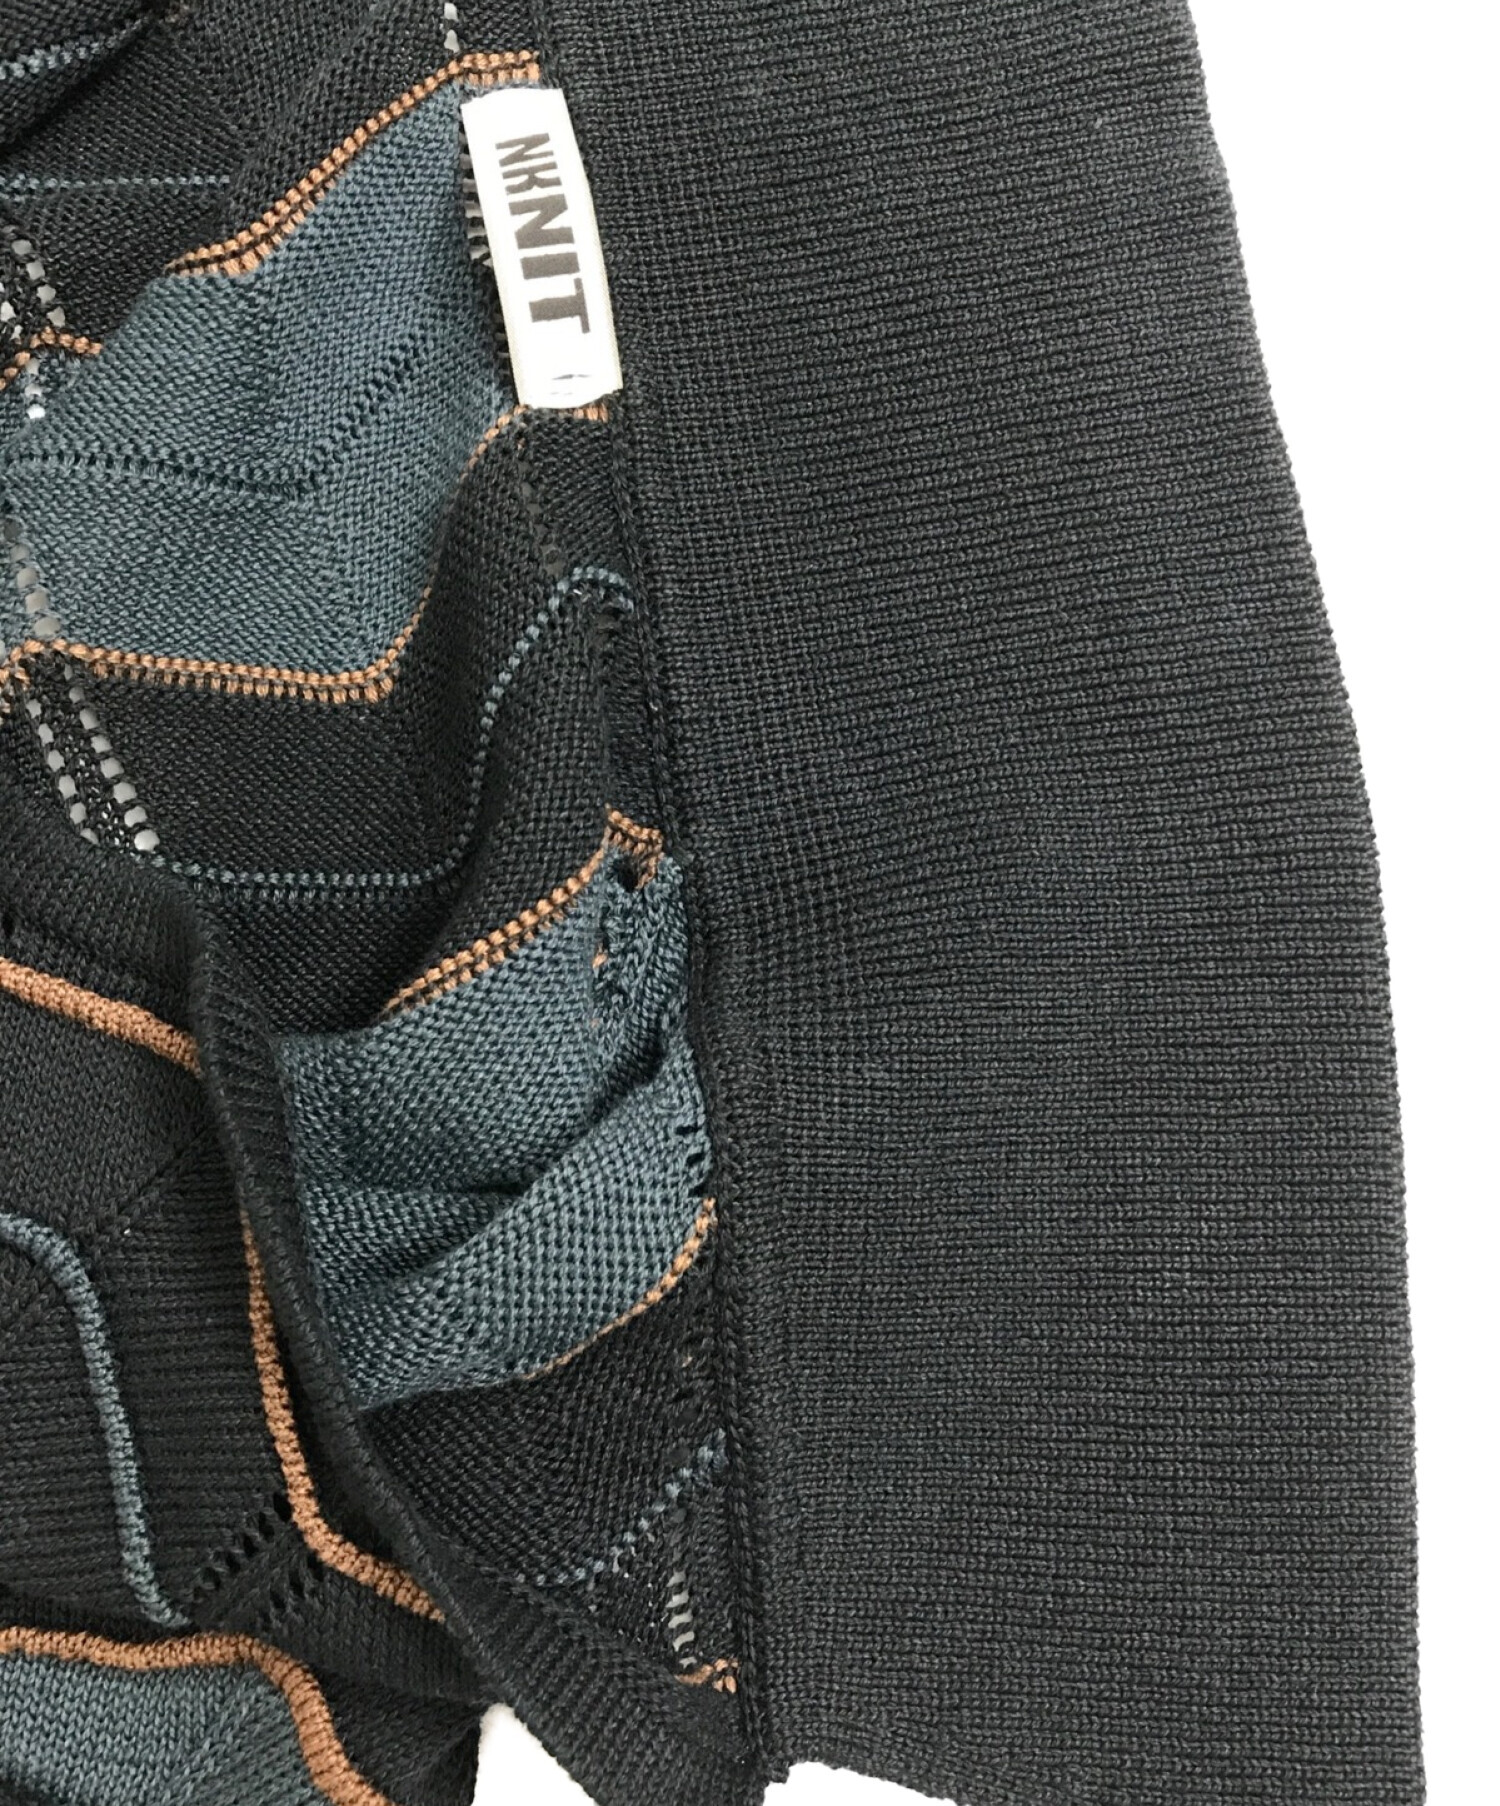 NKNIT (ンニット) wave pattern knit shirt/ニットカーディガン グリーン×ブラック サイズ:不明